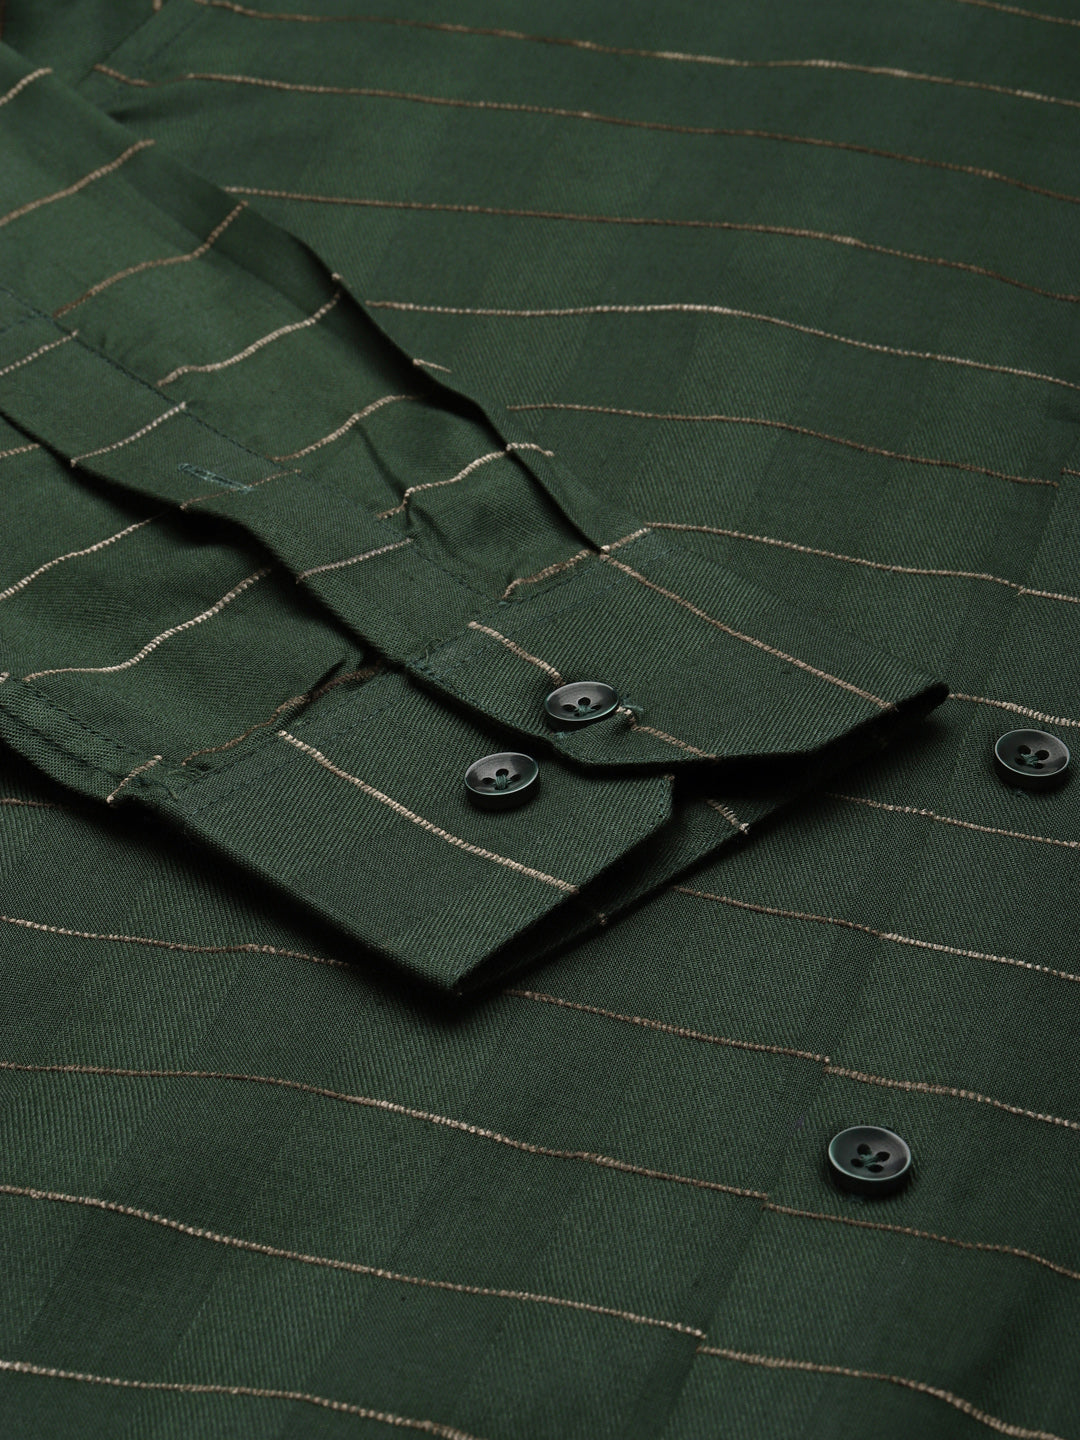 Men's Formal Cotton Horizontal Striped Shirt ( SF 790Olive ) - Jainish